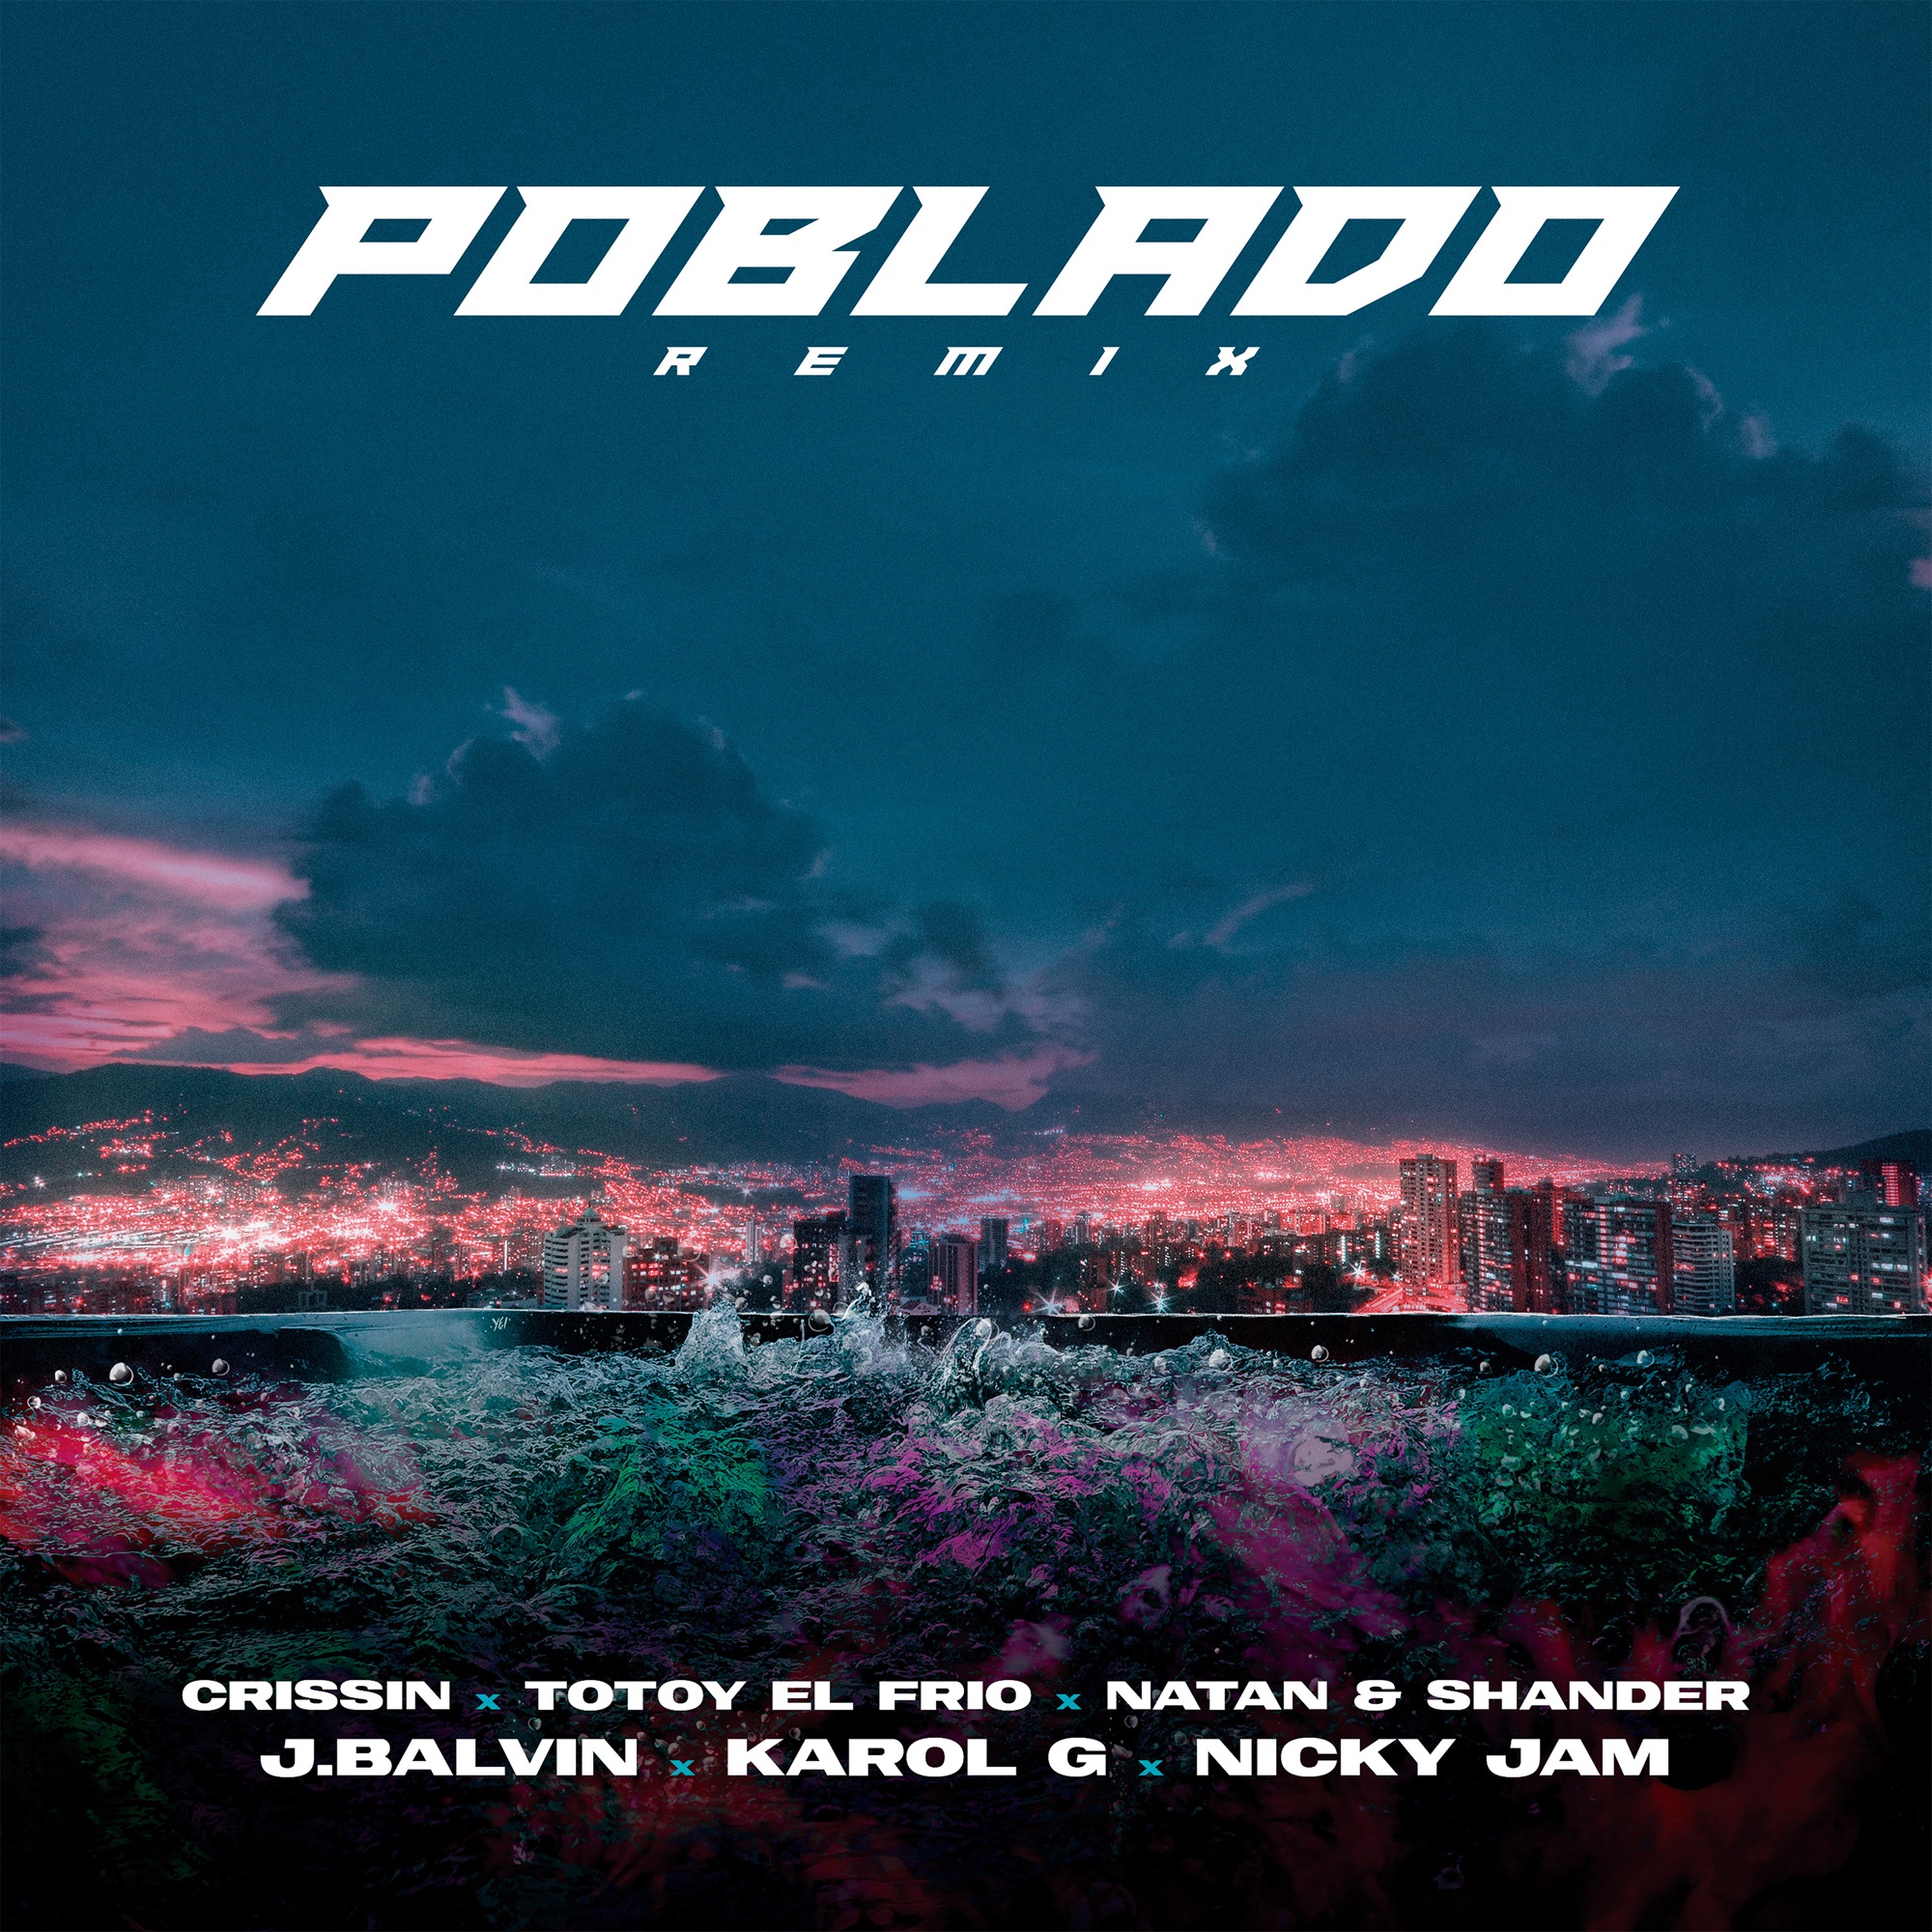 J Balvin, KAROL G & Nicky Jam - Poblado (feat. Crissin, Totoy El Frio & Natan & Shander) - Single